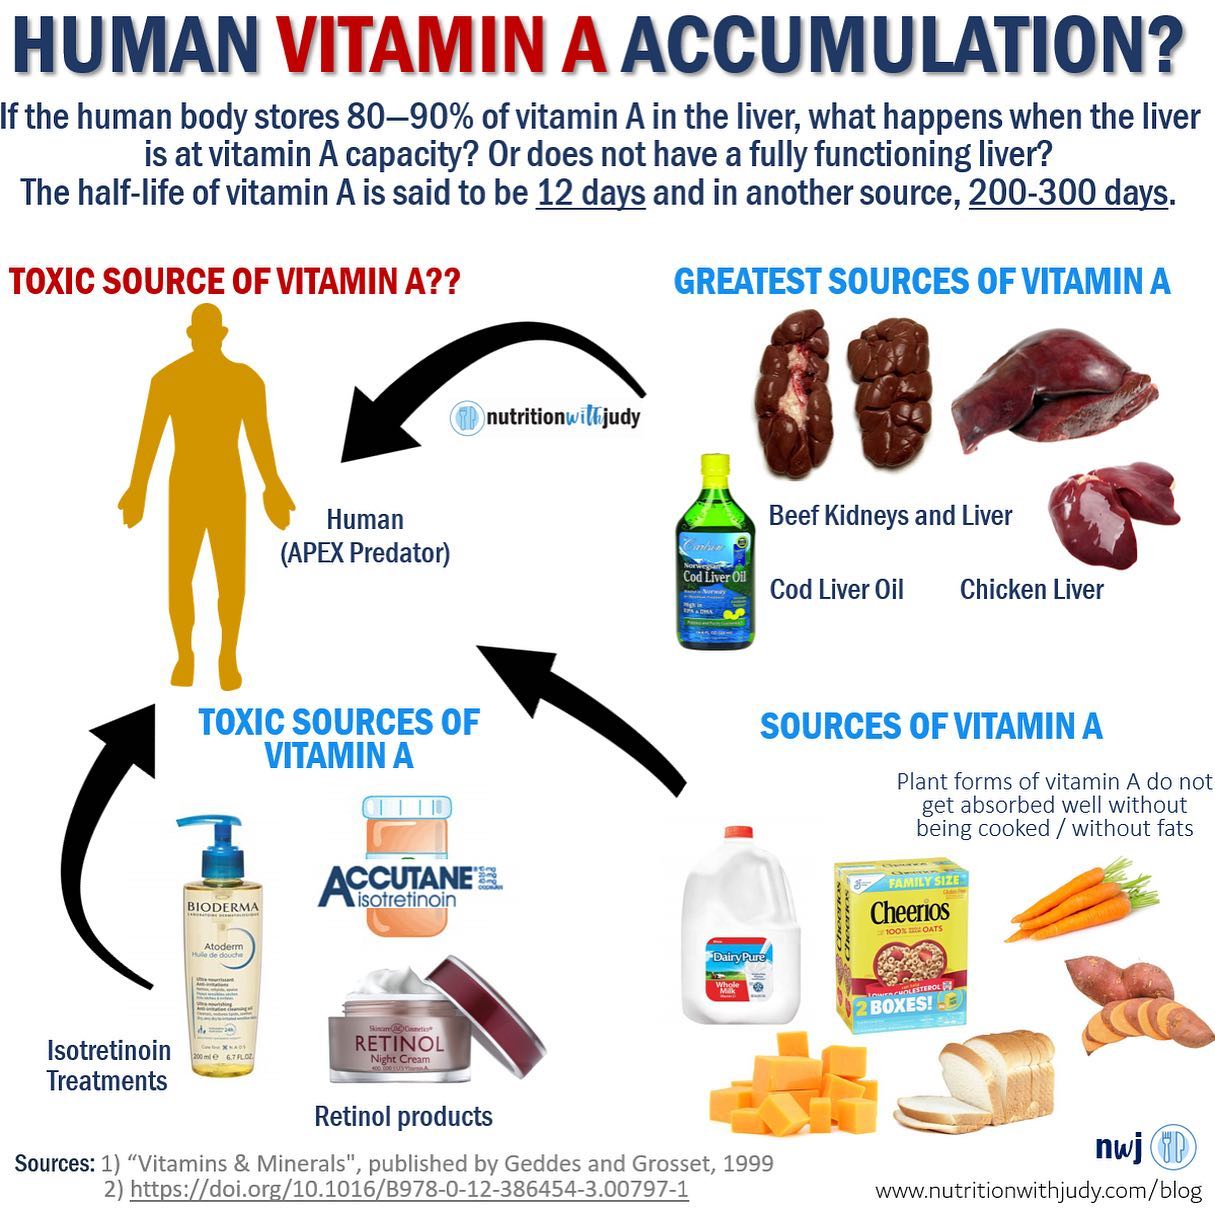 carnivore diet vitamin a accumulation